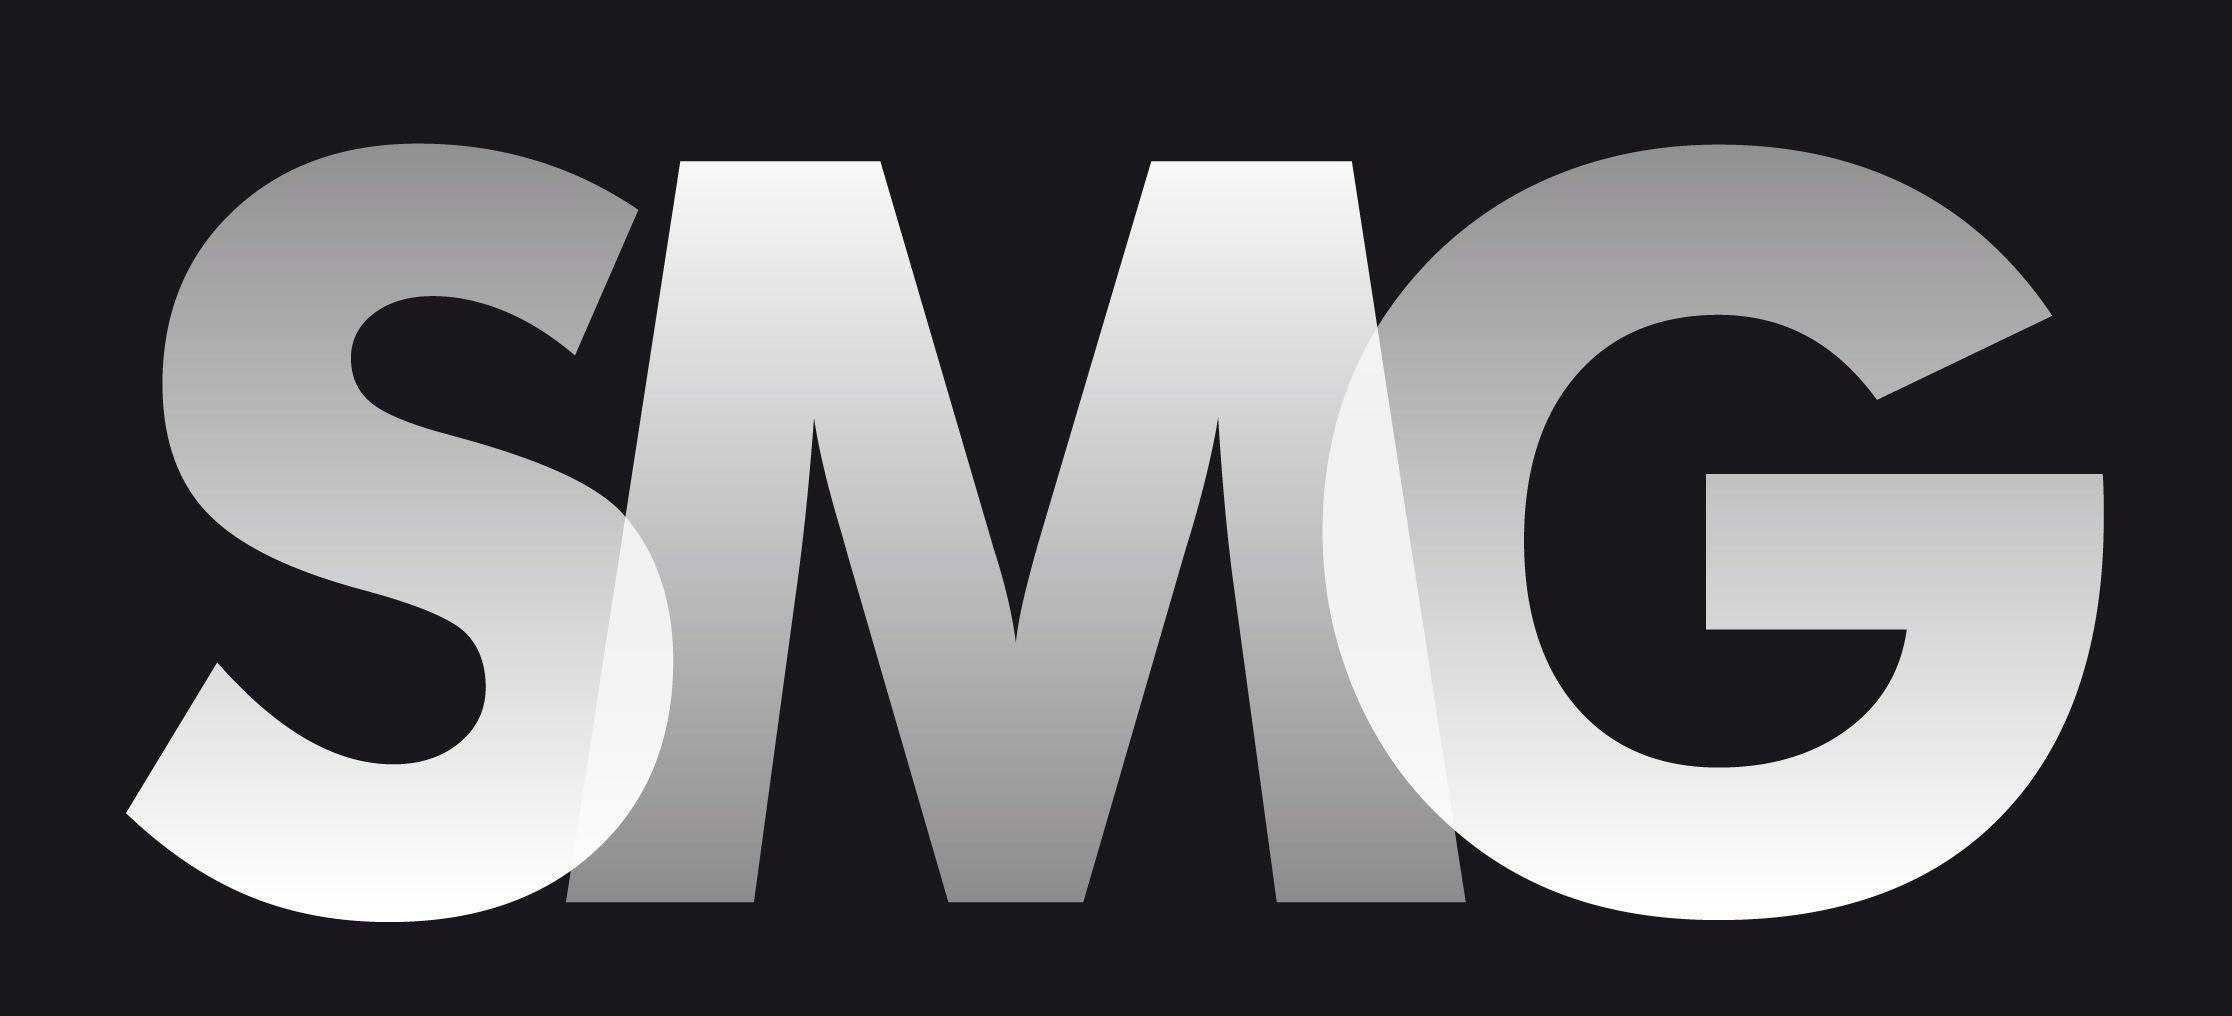 SMG Logo - SMG Logo 2014 (3) WoolSafe Organisation